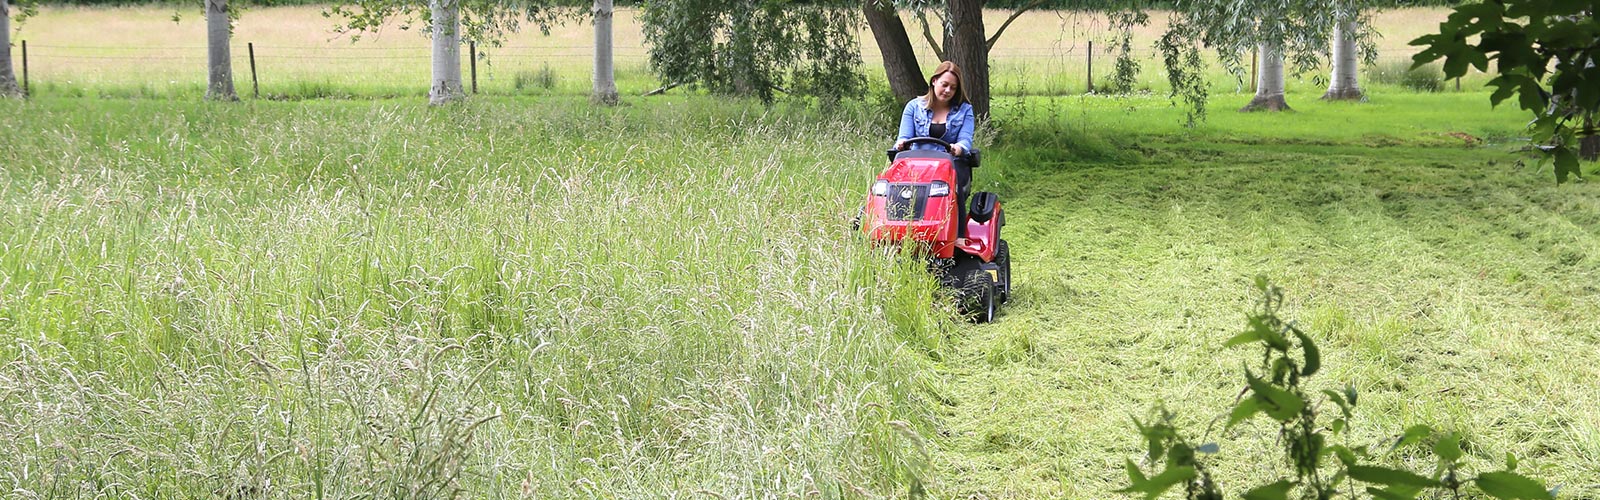 Countax B Series garden tractor riding mower four wheel drive cutting tall grass